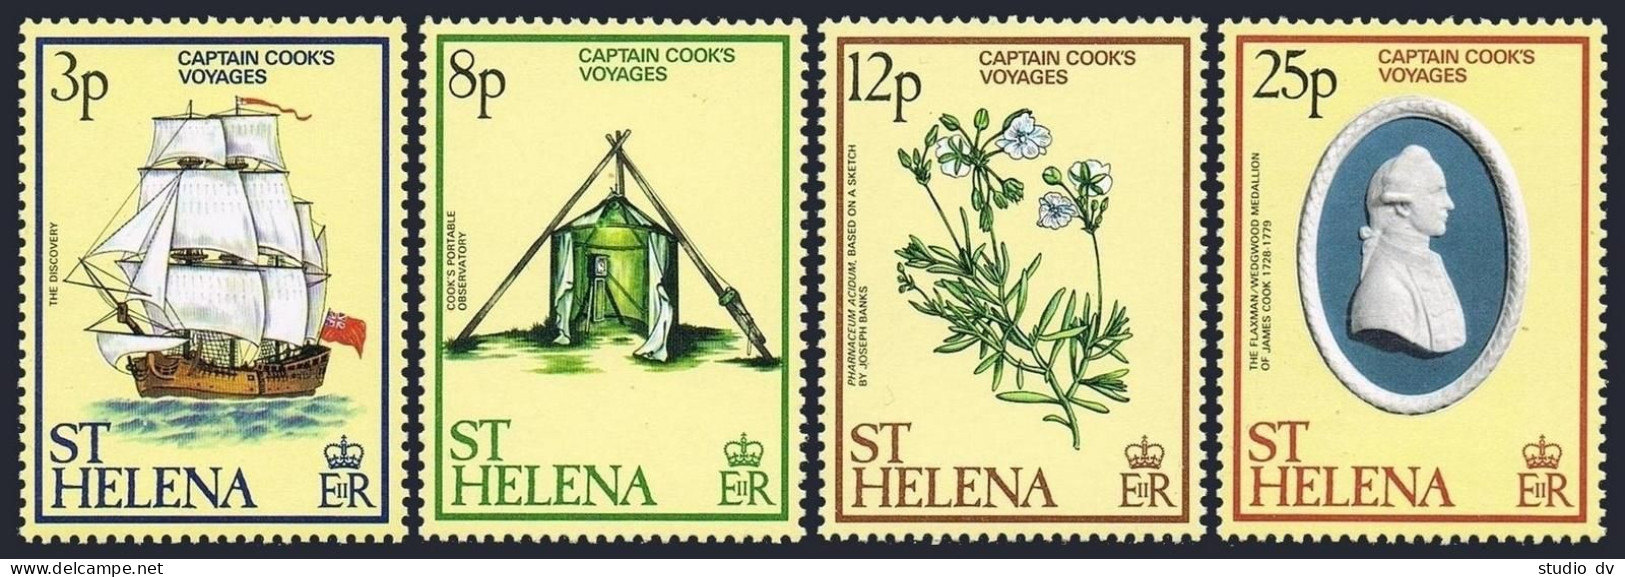 St Helena 324-327,MNH.Michel 313-316. Capt.James Cook's Voyages,1979.Flowers. - Saint Helena Island